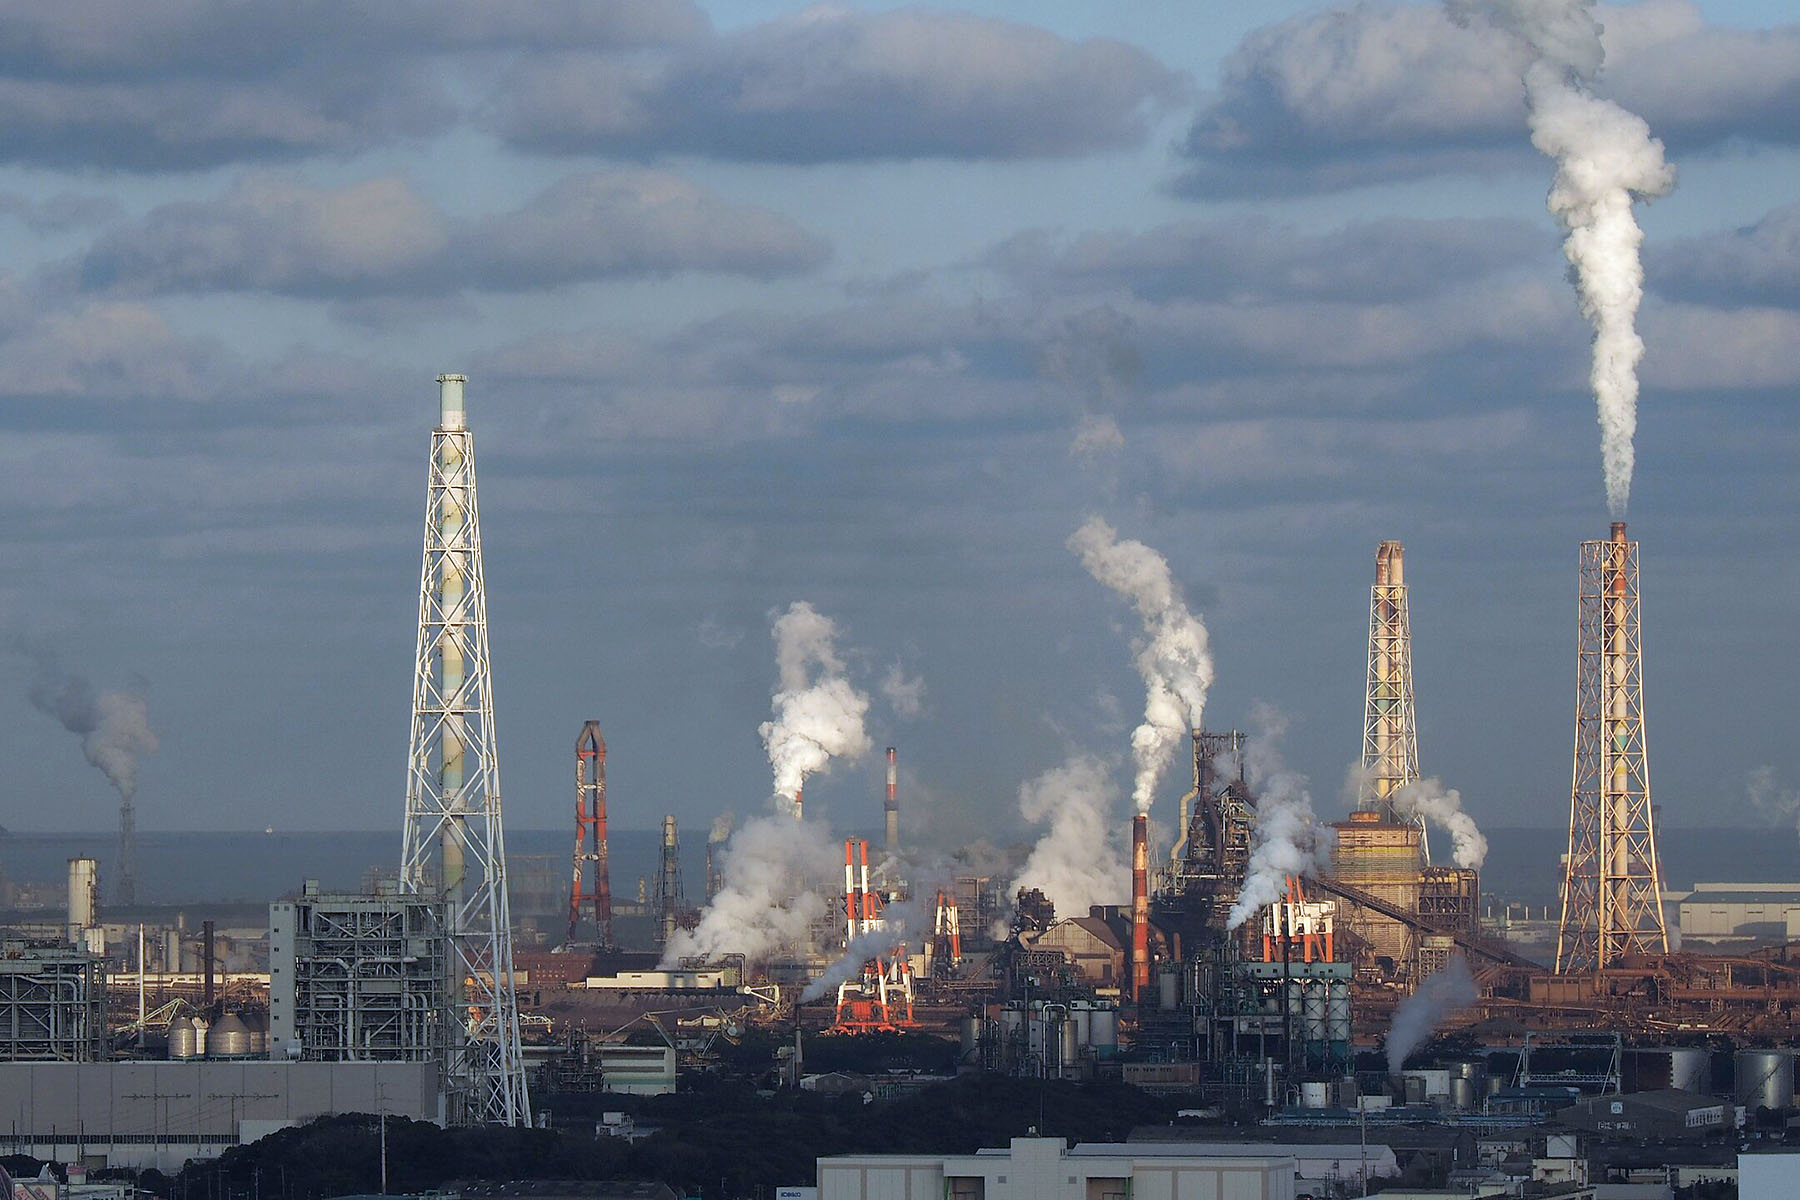 Nippon Steel industry is emitting CO2 in the air (Kitakyushu-City, Japan)